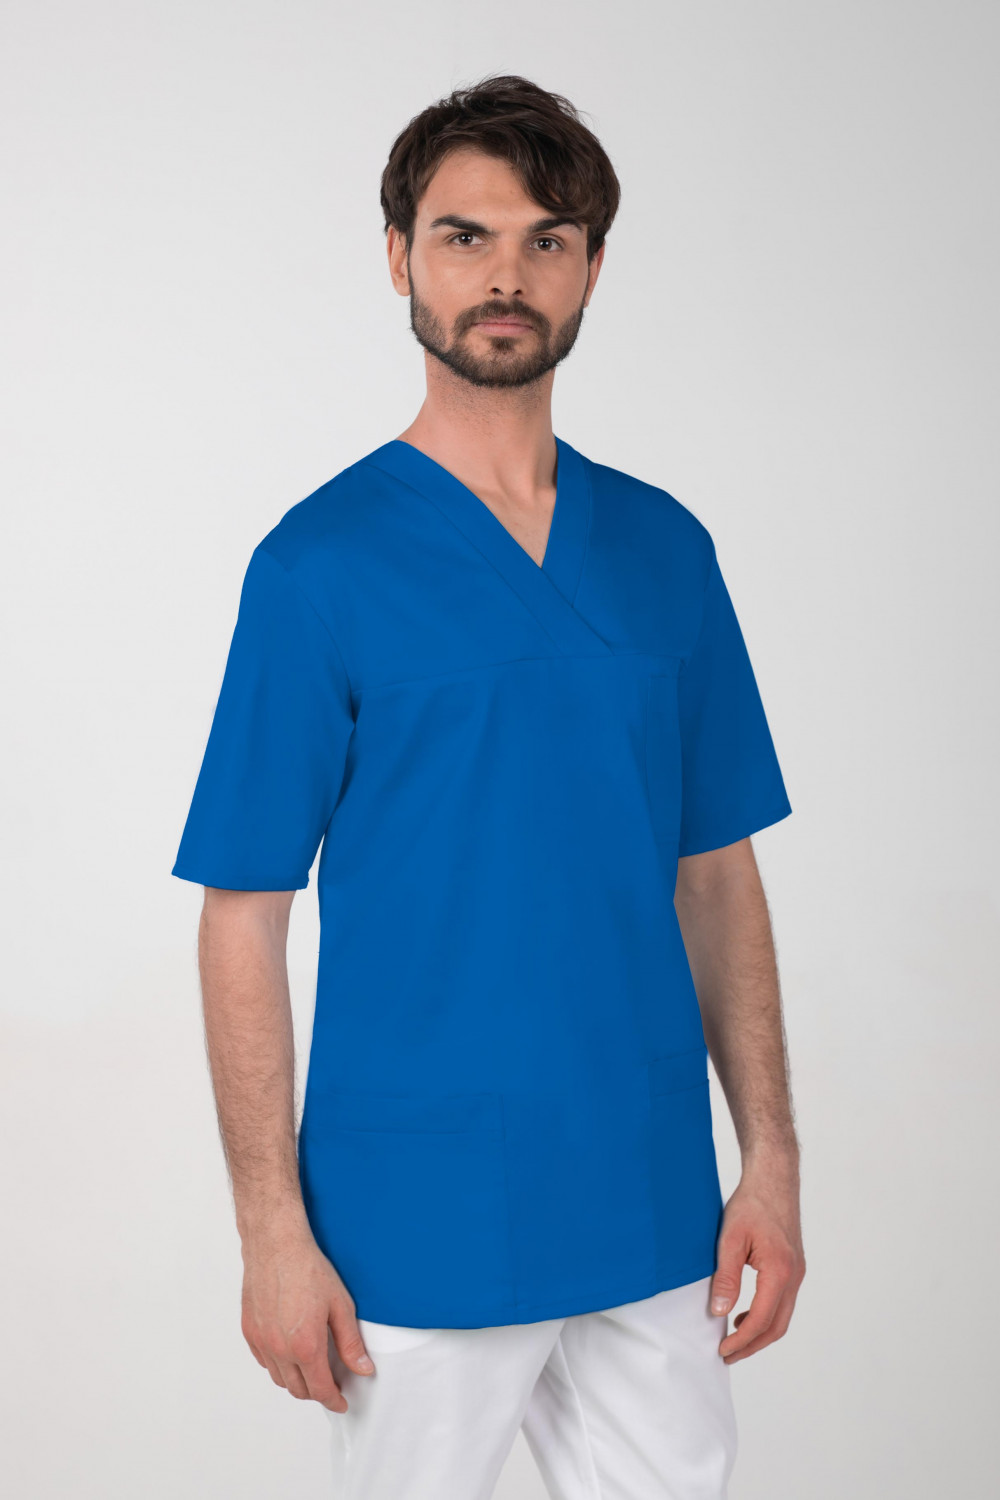 M-074CX Elastyczna bluza medyczna męska chirurgiczna indygo